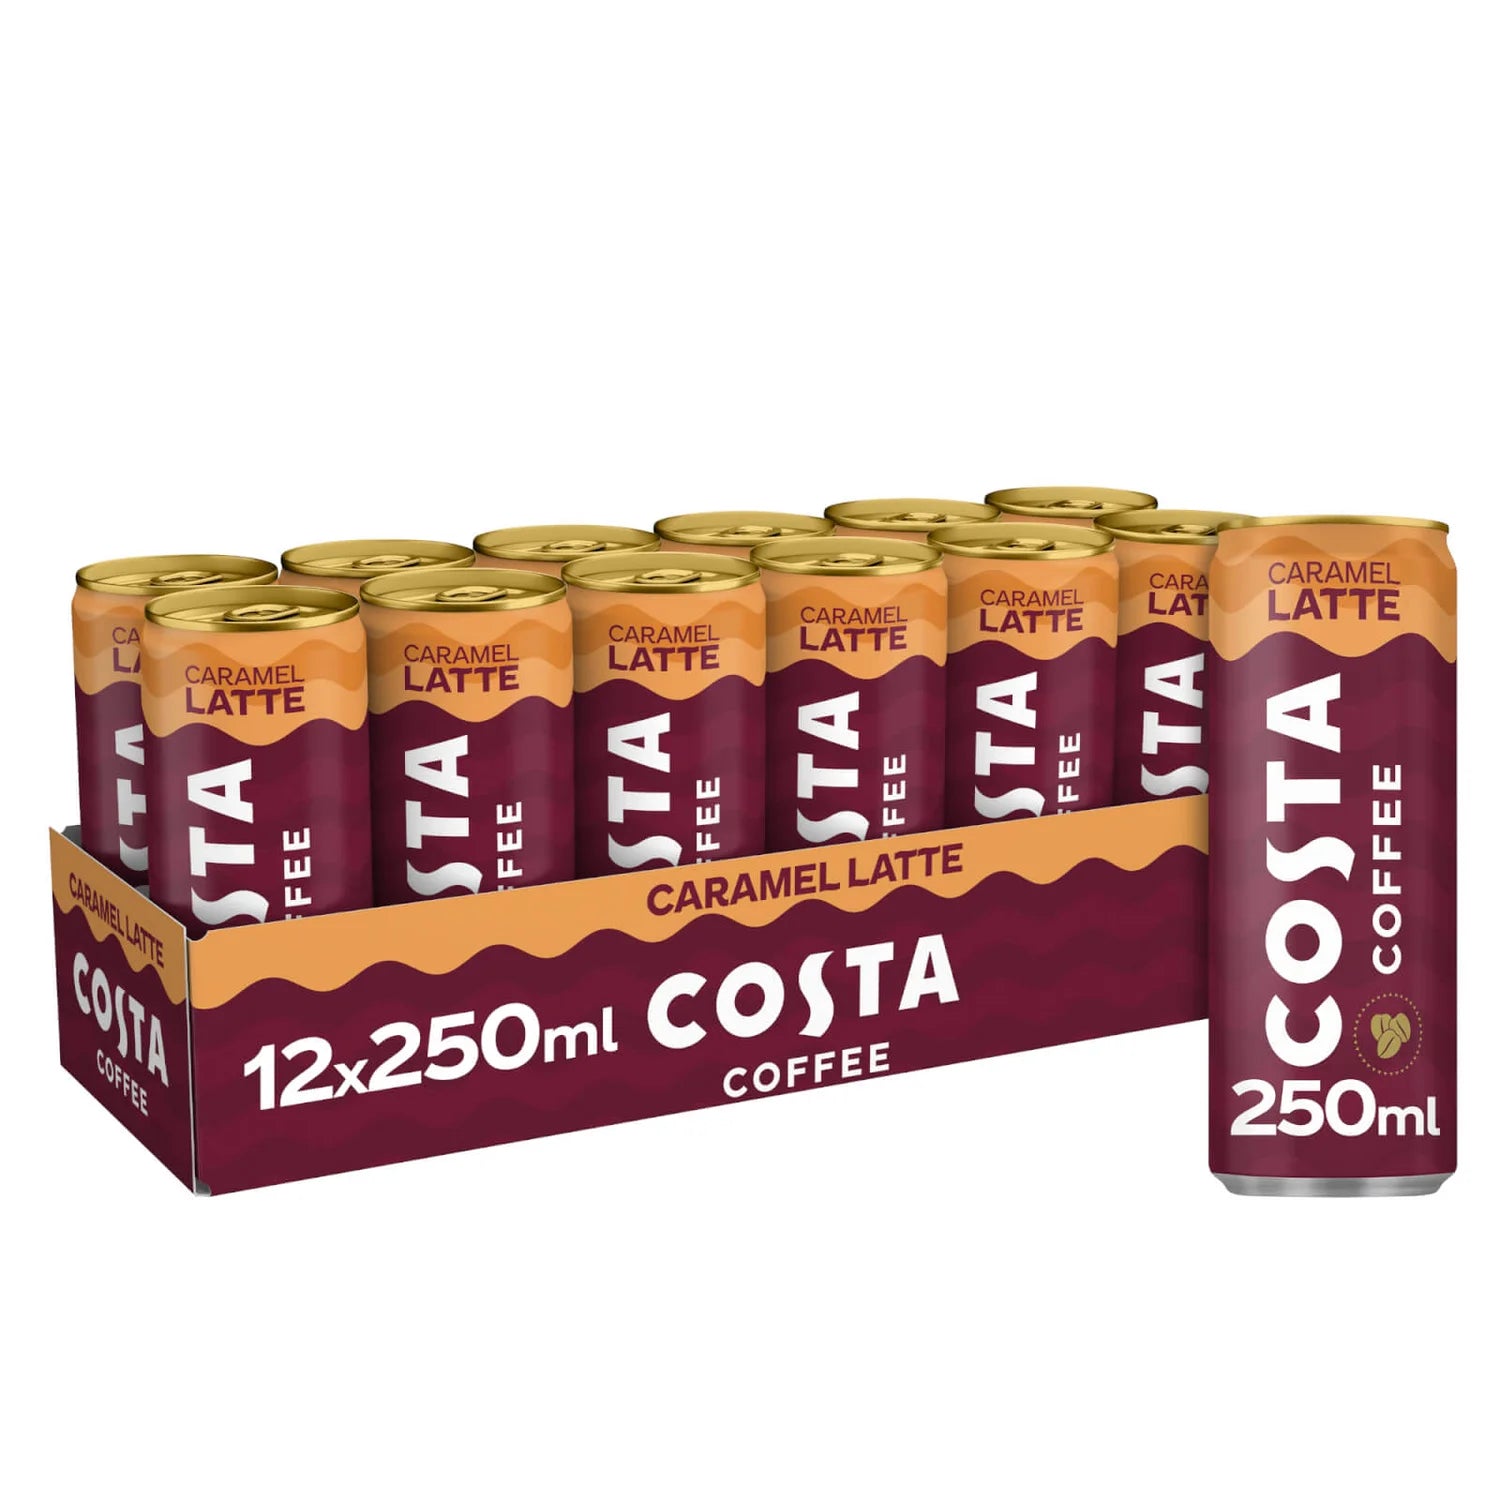 Costa Coffee Caramel Latte - 250ml - case of 12